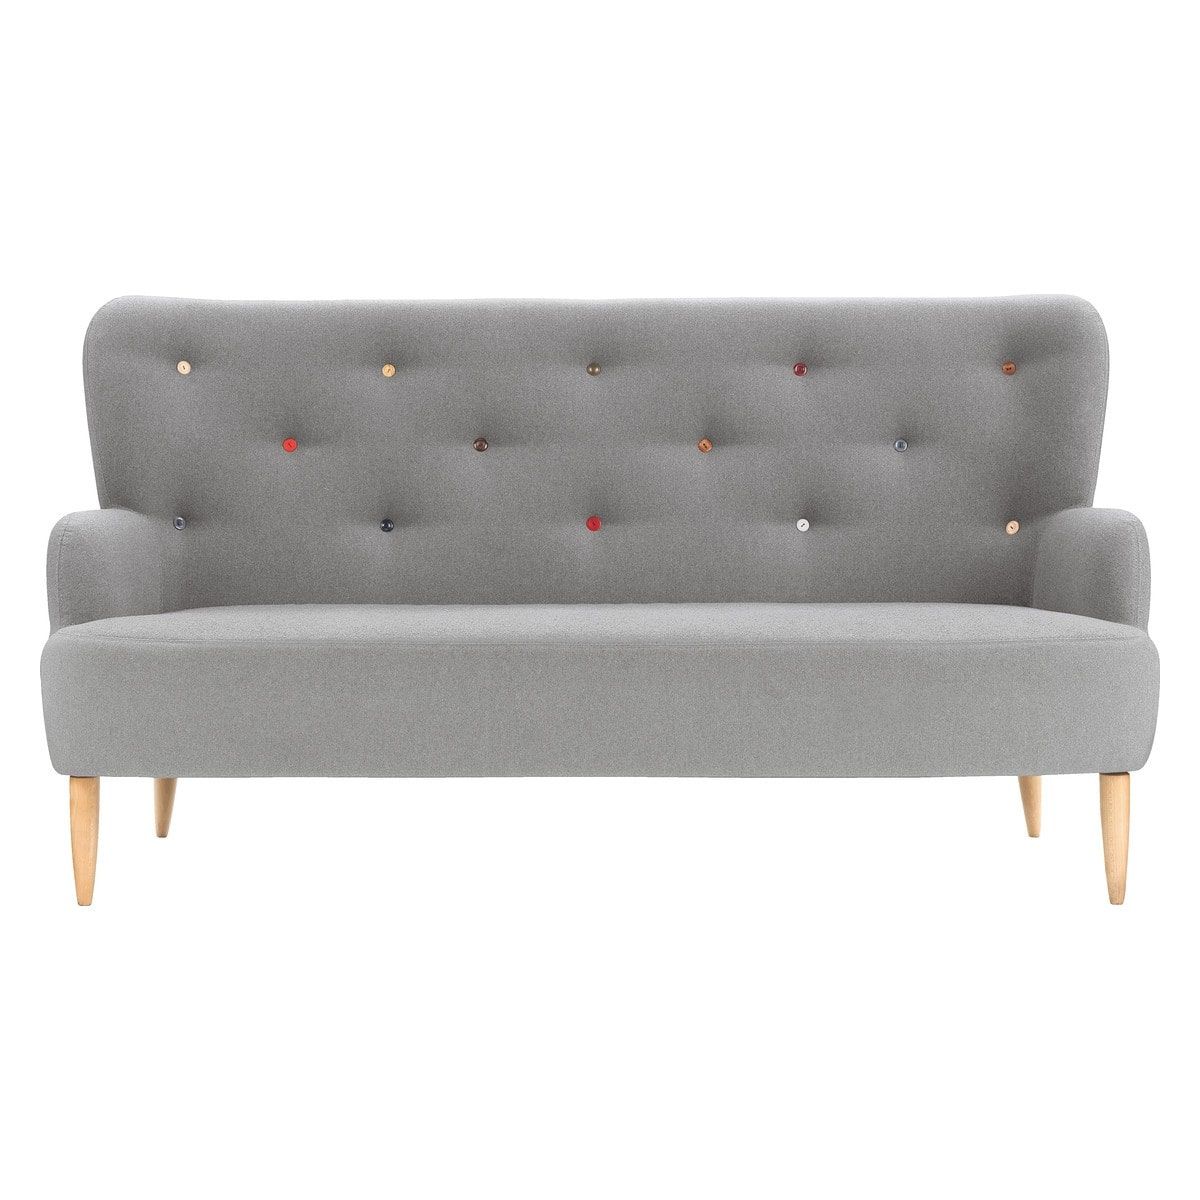  Ghế sofa uni 8543 